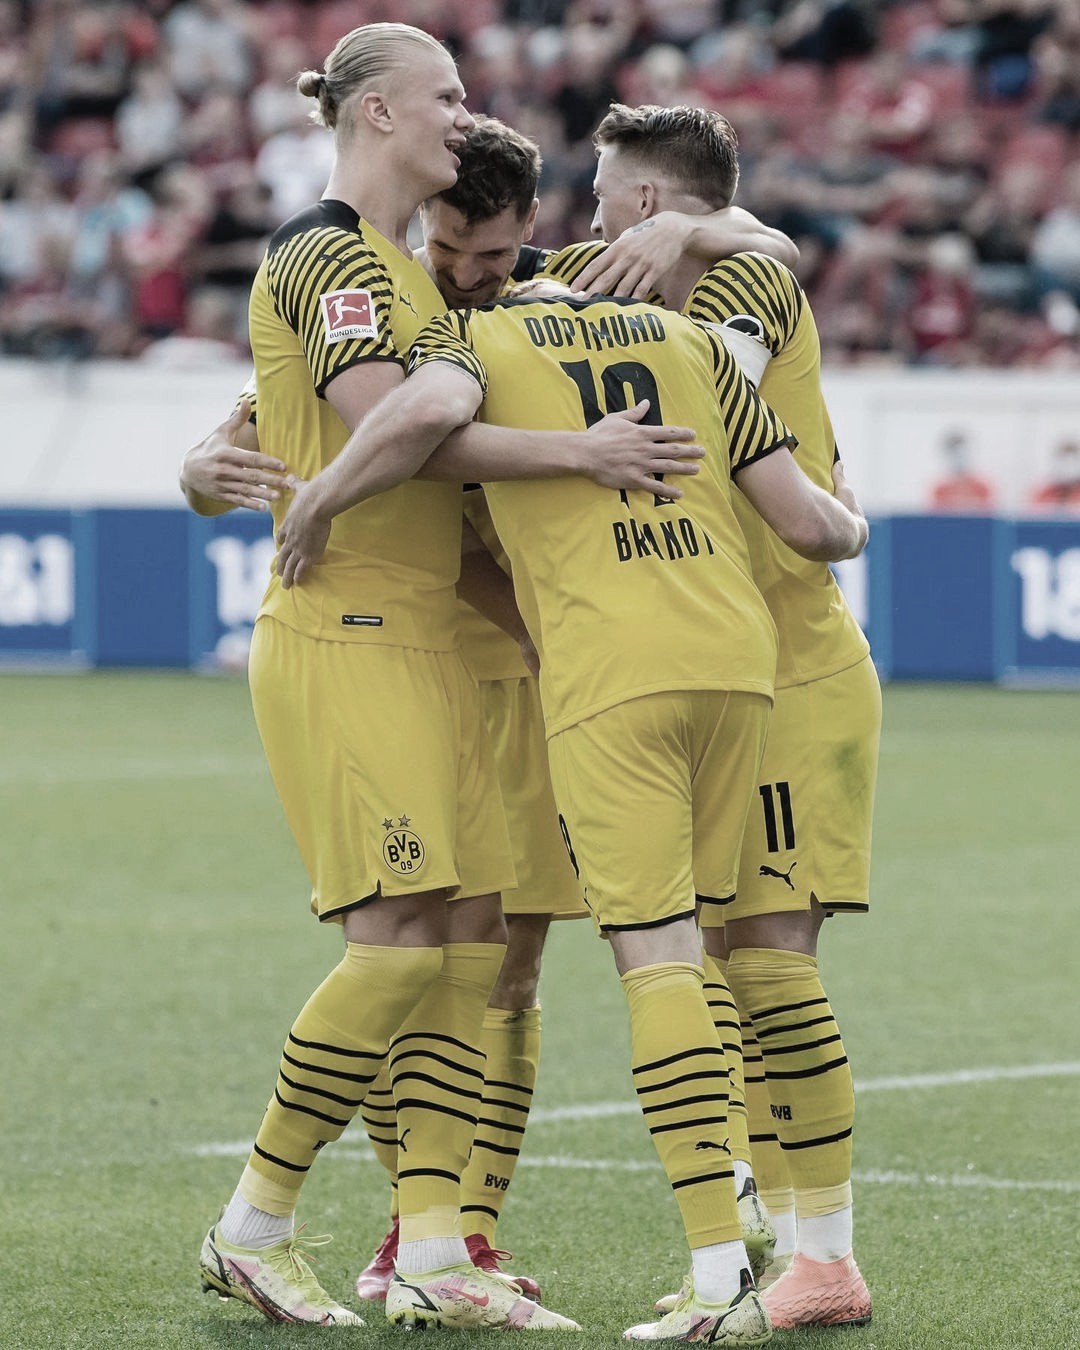 Enorme triunfo del Dortmund sobre el Leverkusen